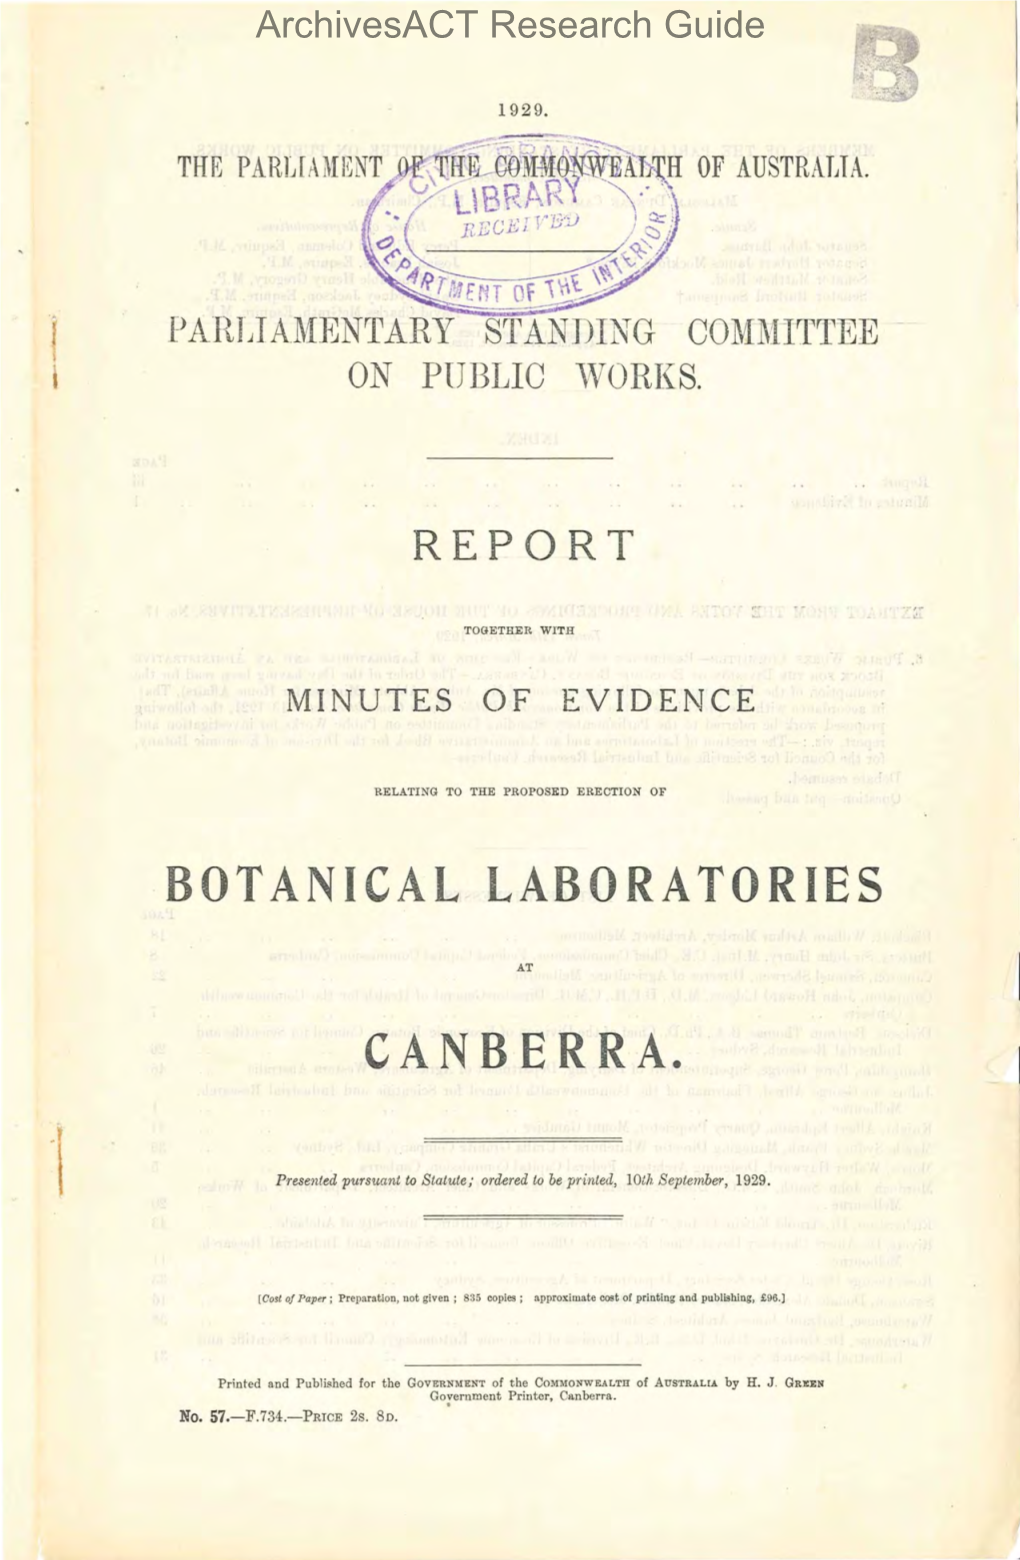 Botanical Laboratories Canberra